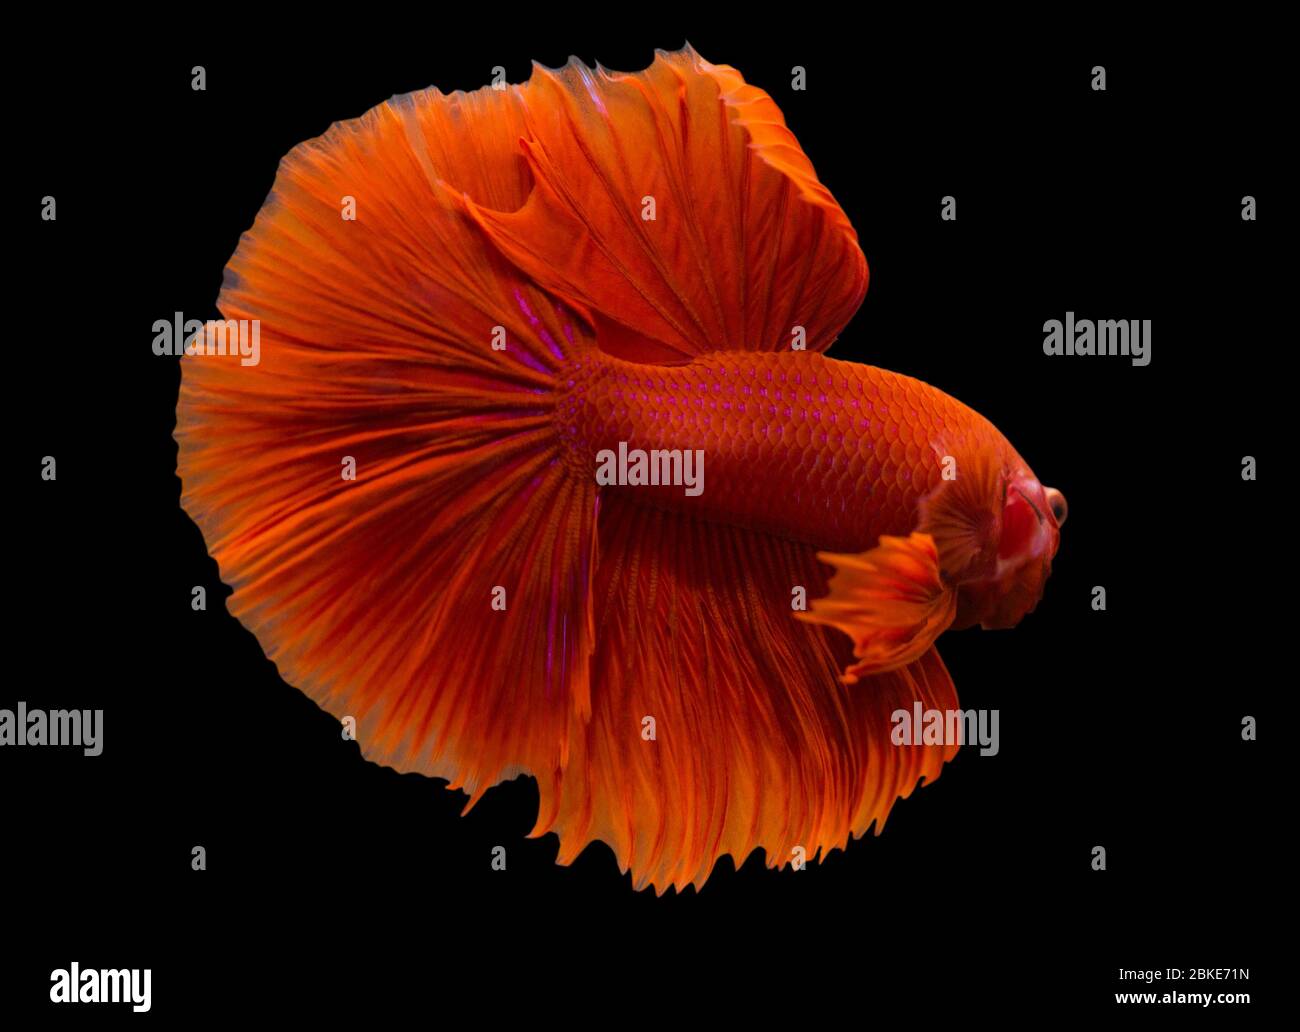 Betta Super Red Halfmoon HM Male or Plakat Fighting Fish Splendens On Black  Background Stock Photo - Alamy